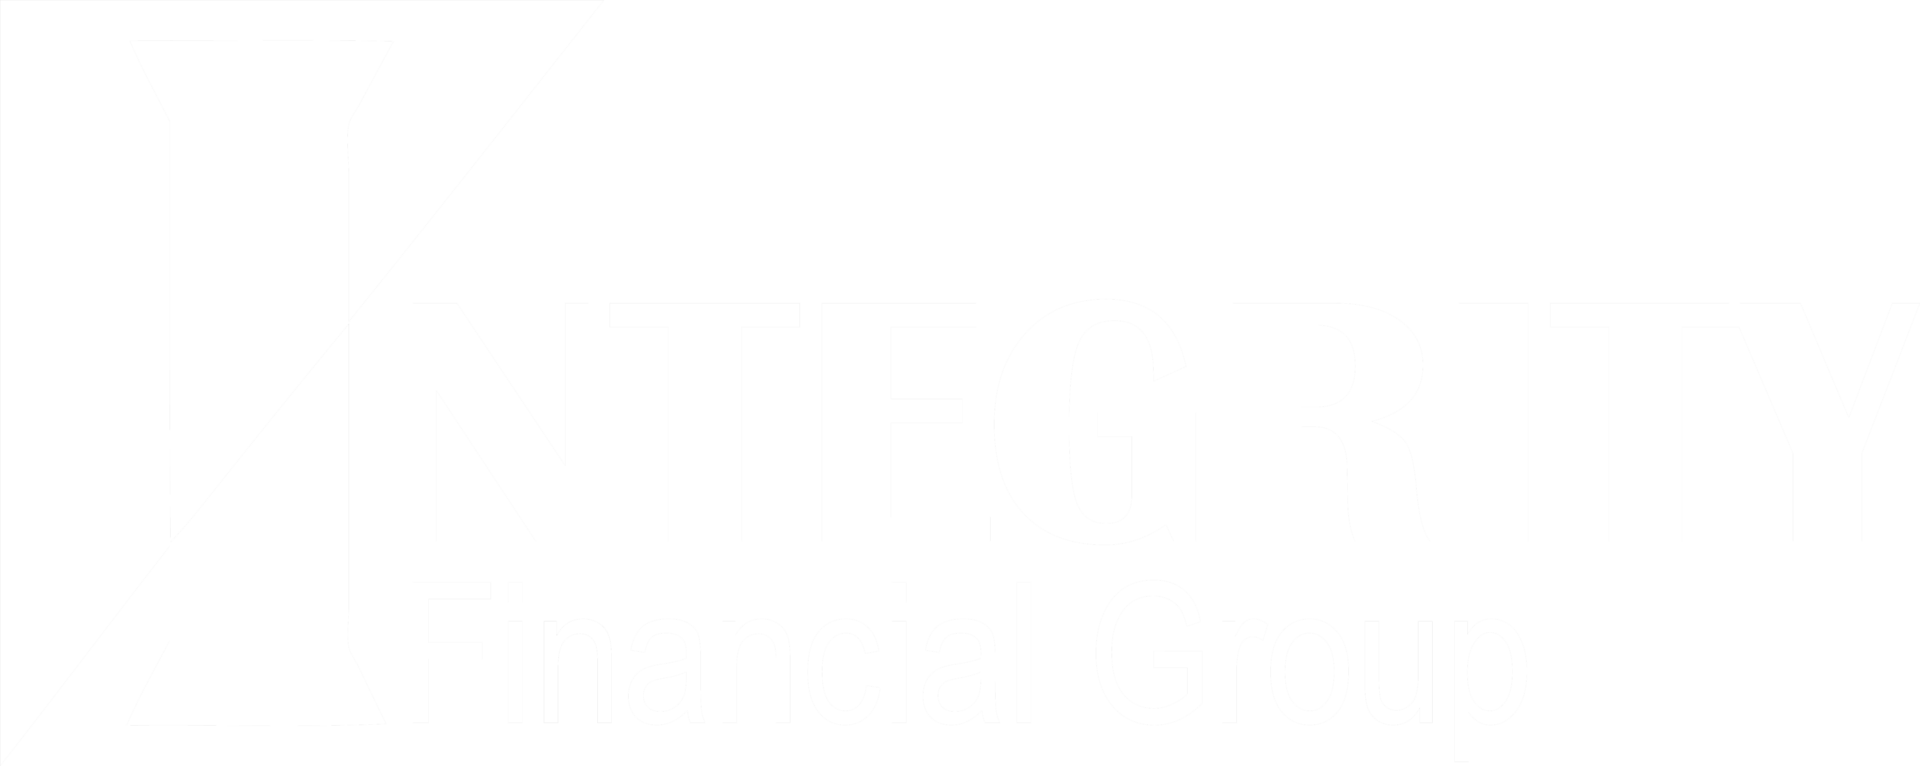 Integrity Financial Group Logo white